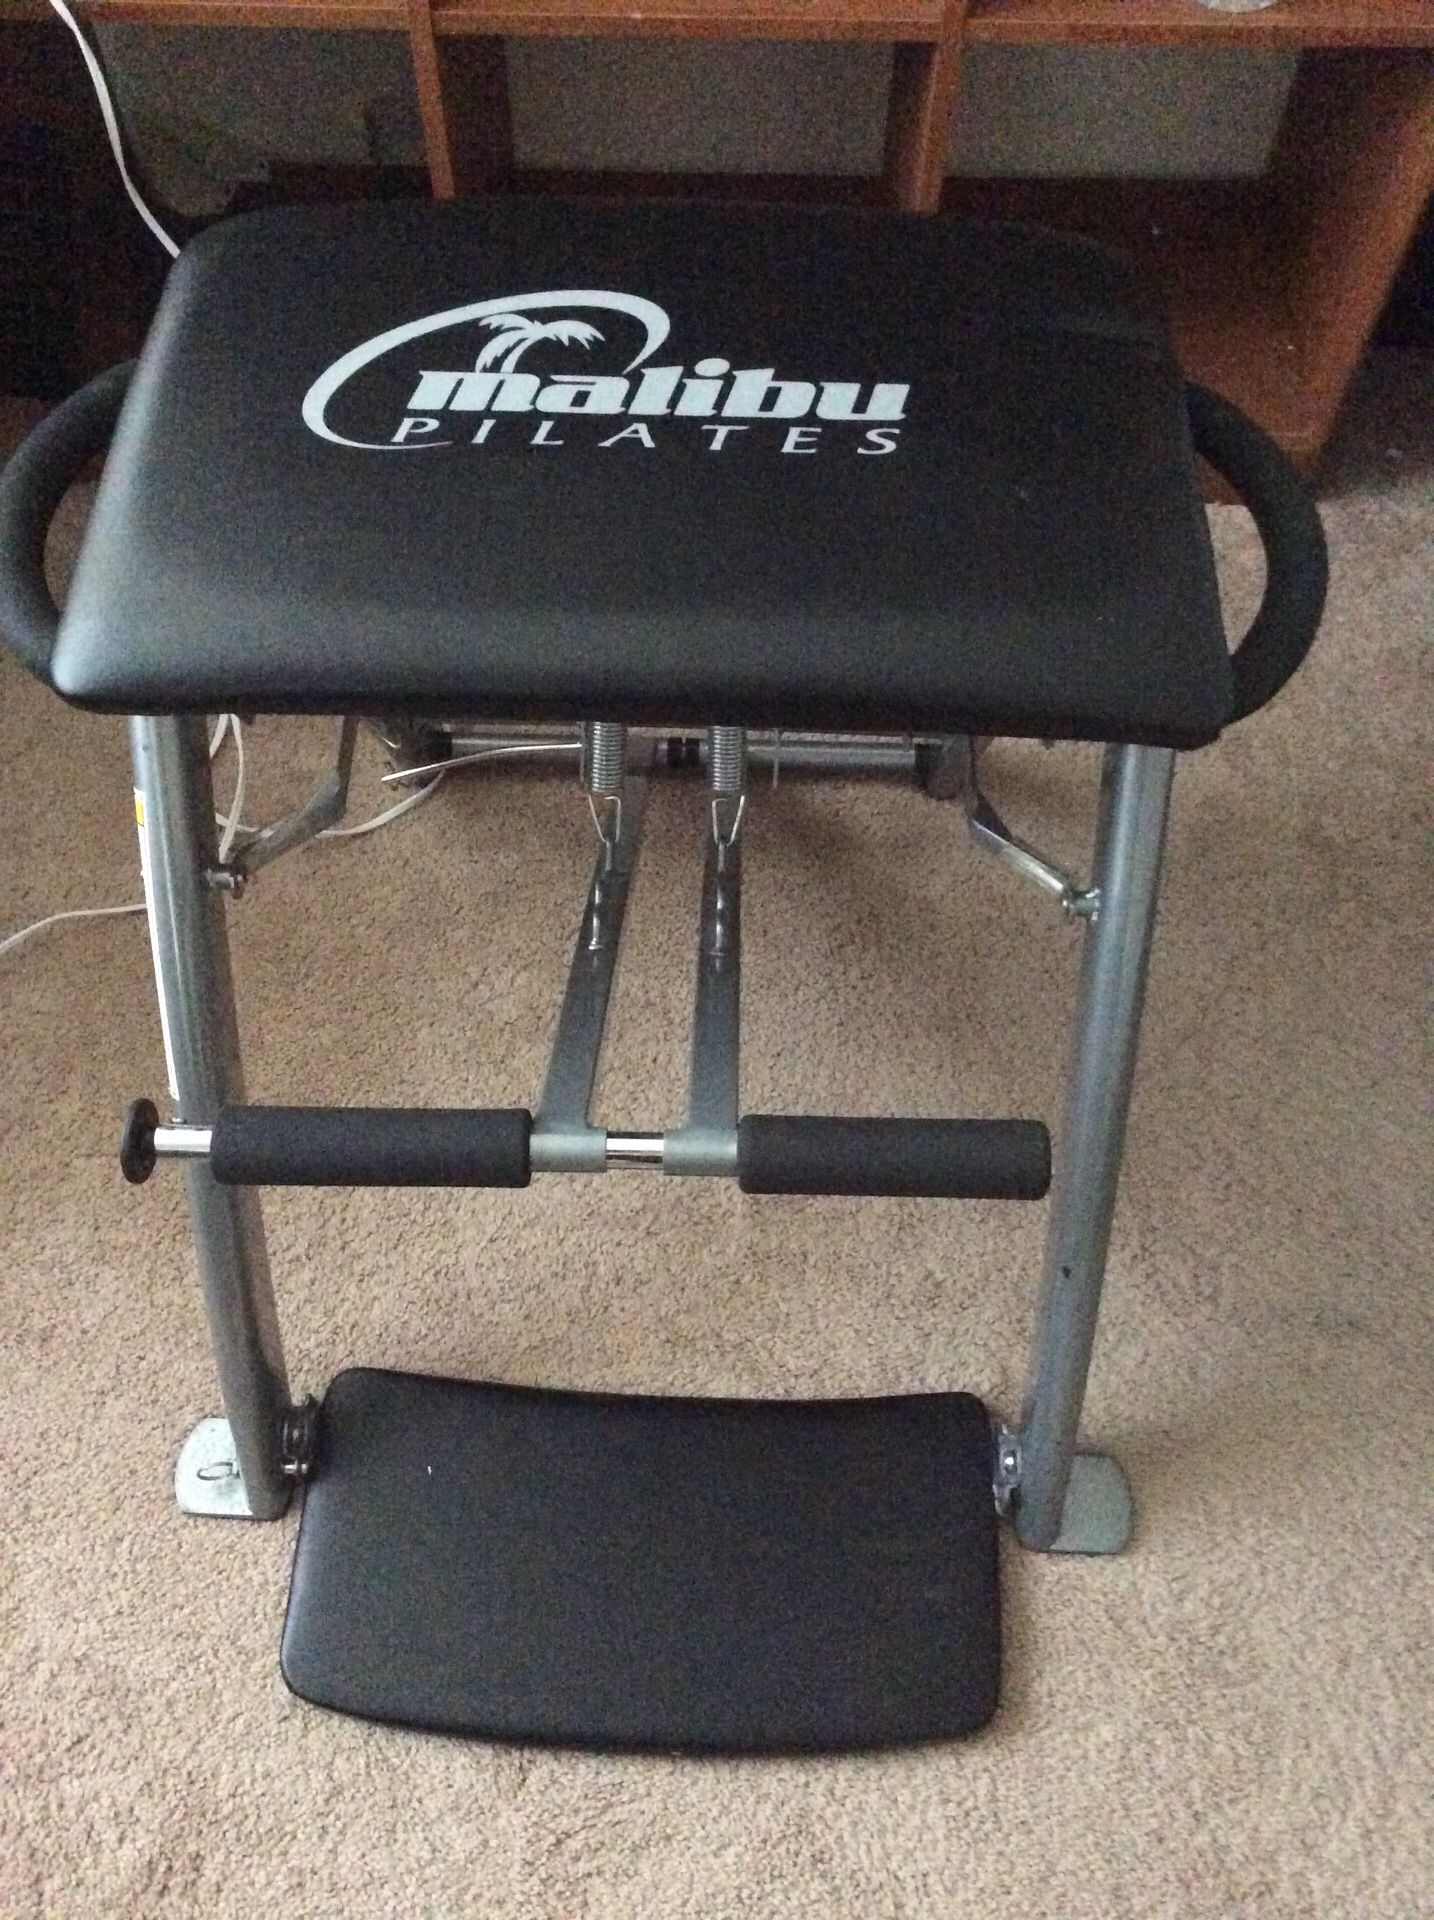 Malibu Pilates abs exercise machine